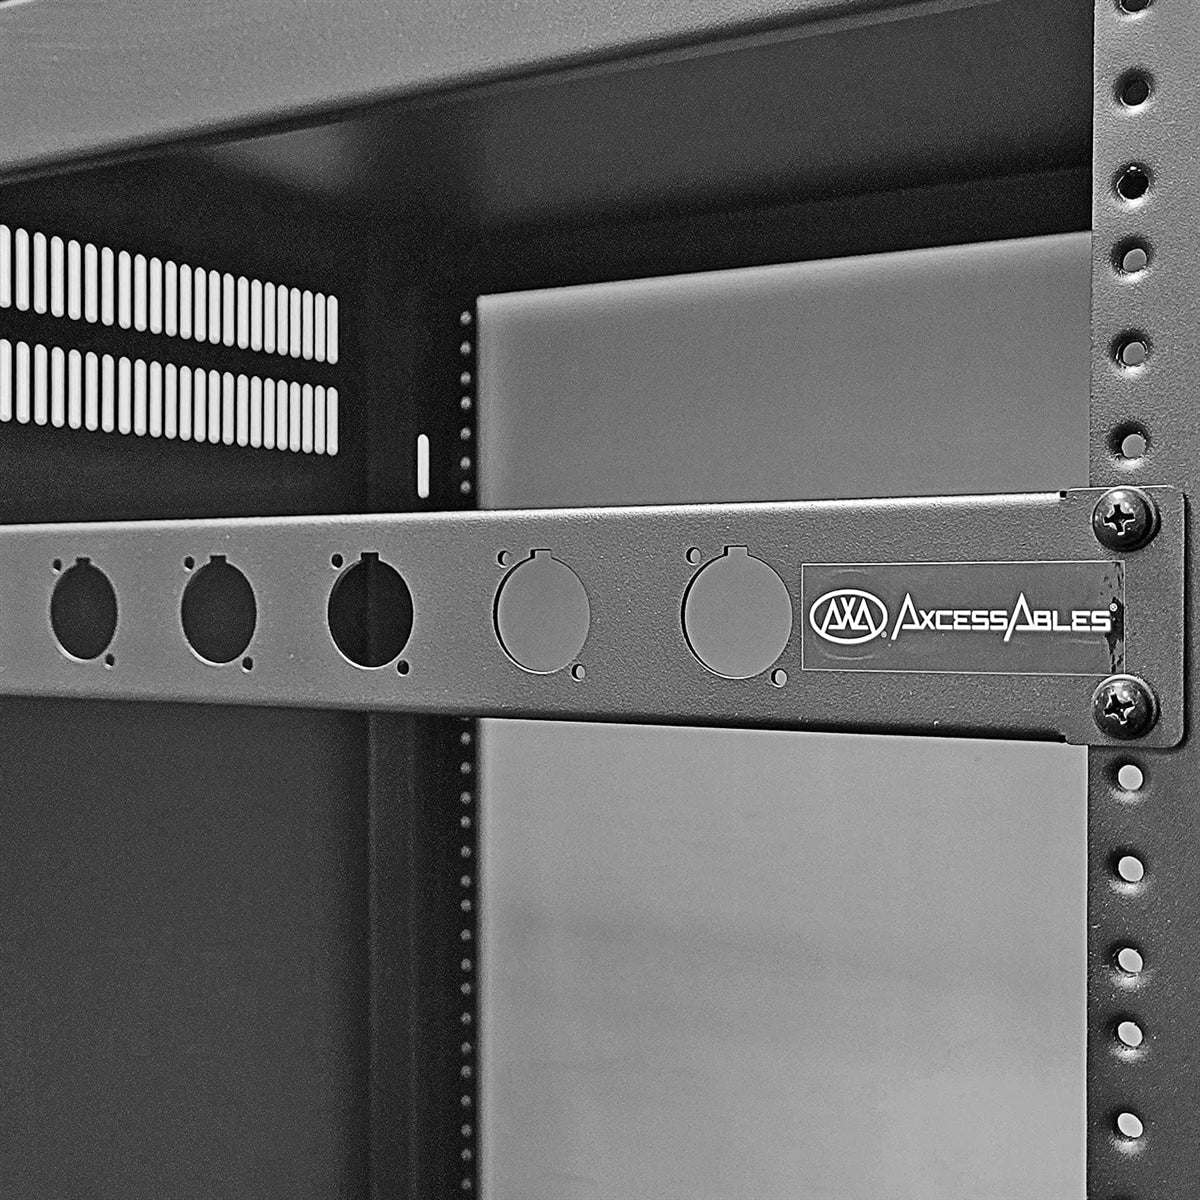 AxcessAbles RKINPUT1U 1U D-Series 8 Connectors Punch-out Component Panel for 19 inch AV, Sound, Computer Equipment Racks. Patch panel compatible with XLR, Speakon, Neutrik Outputs.